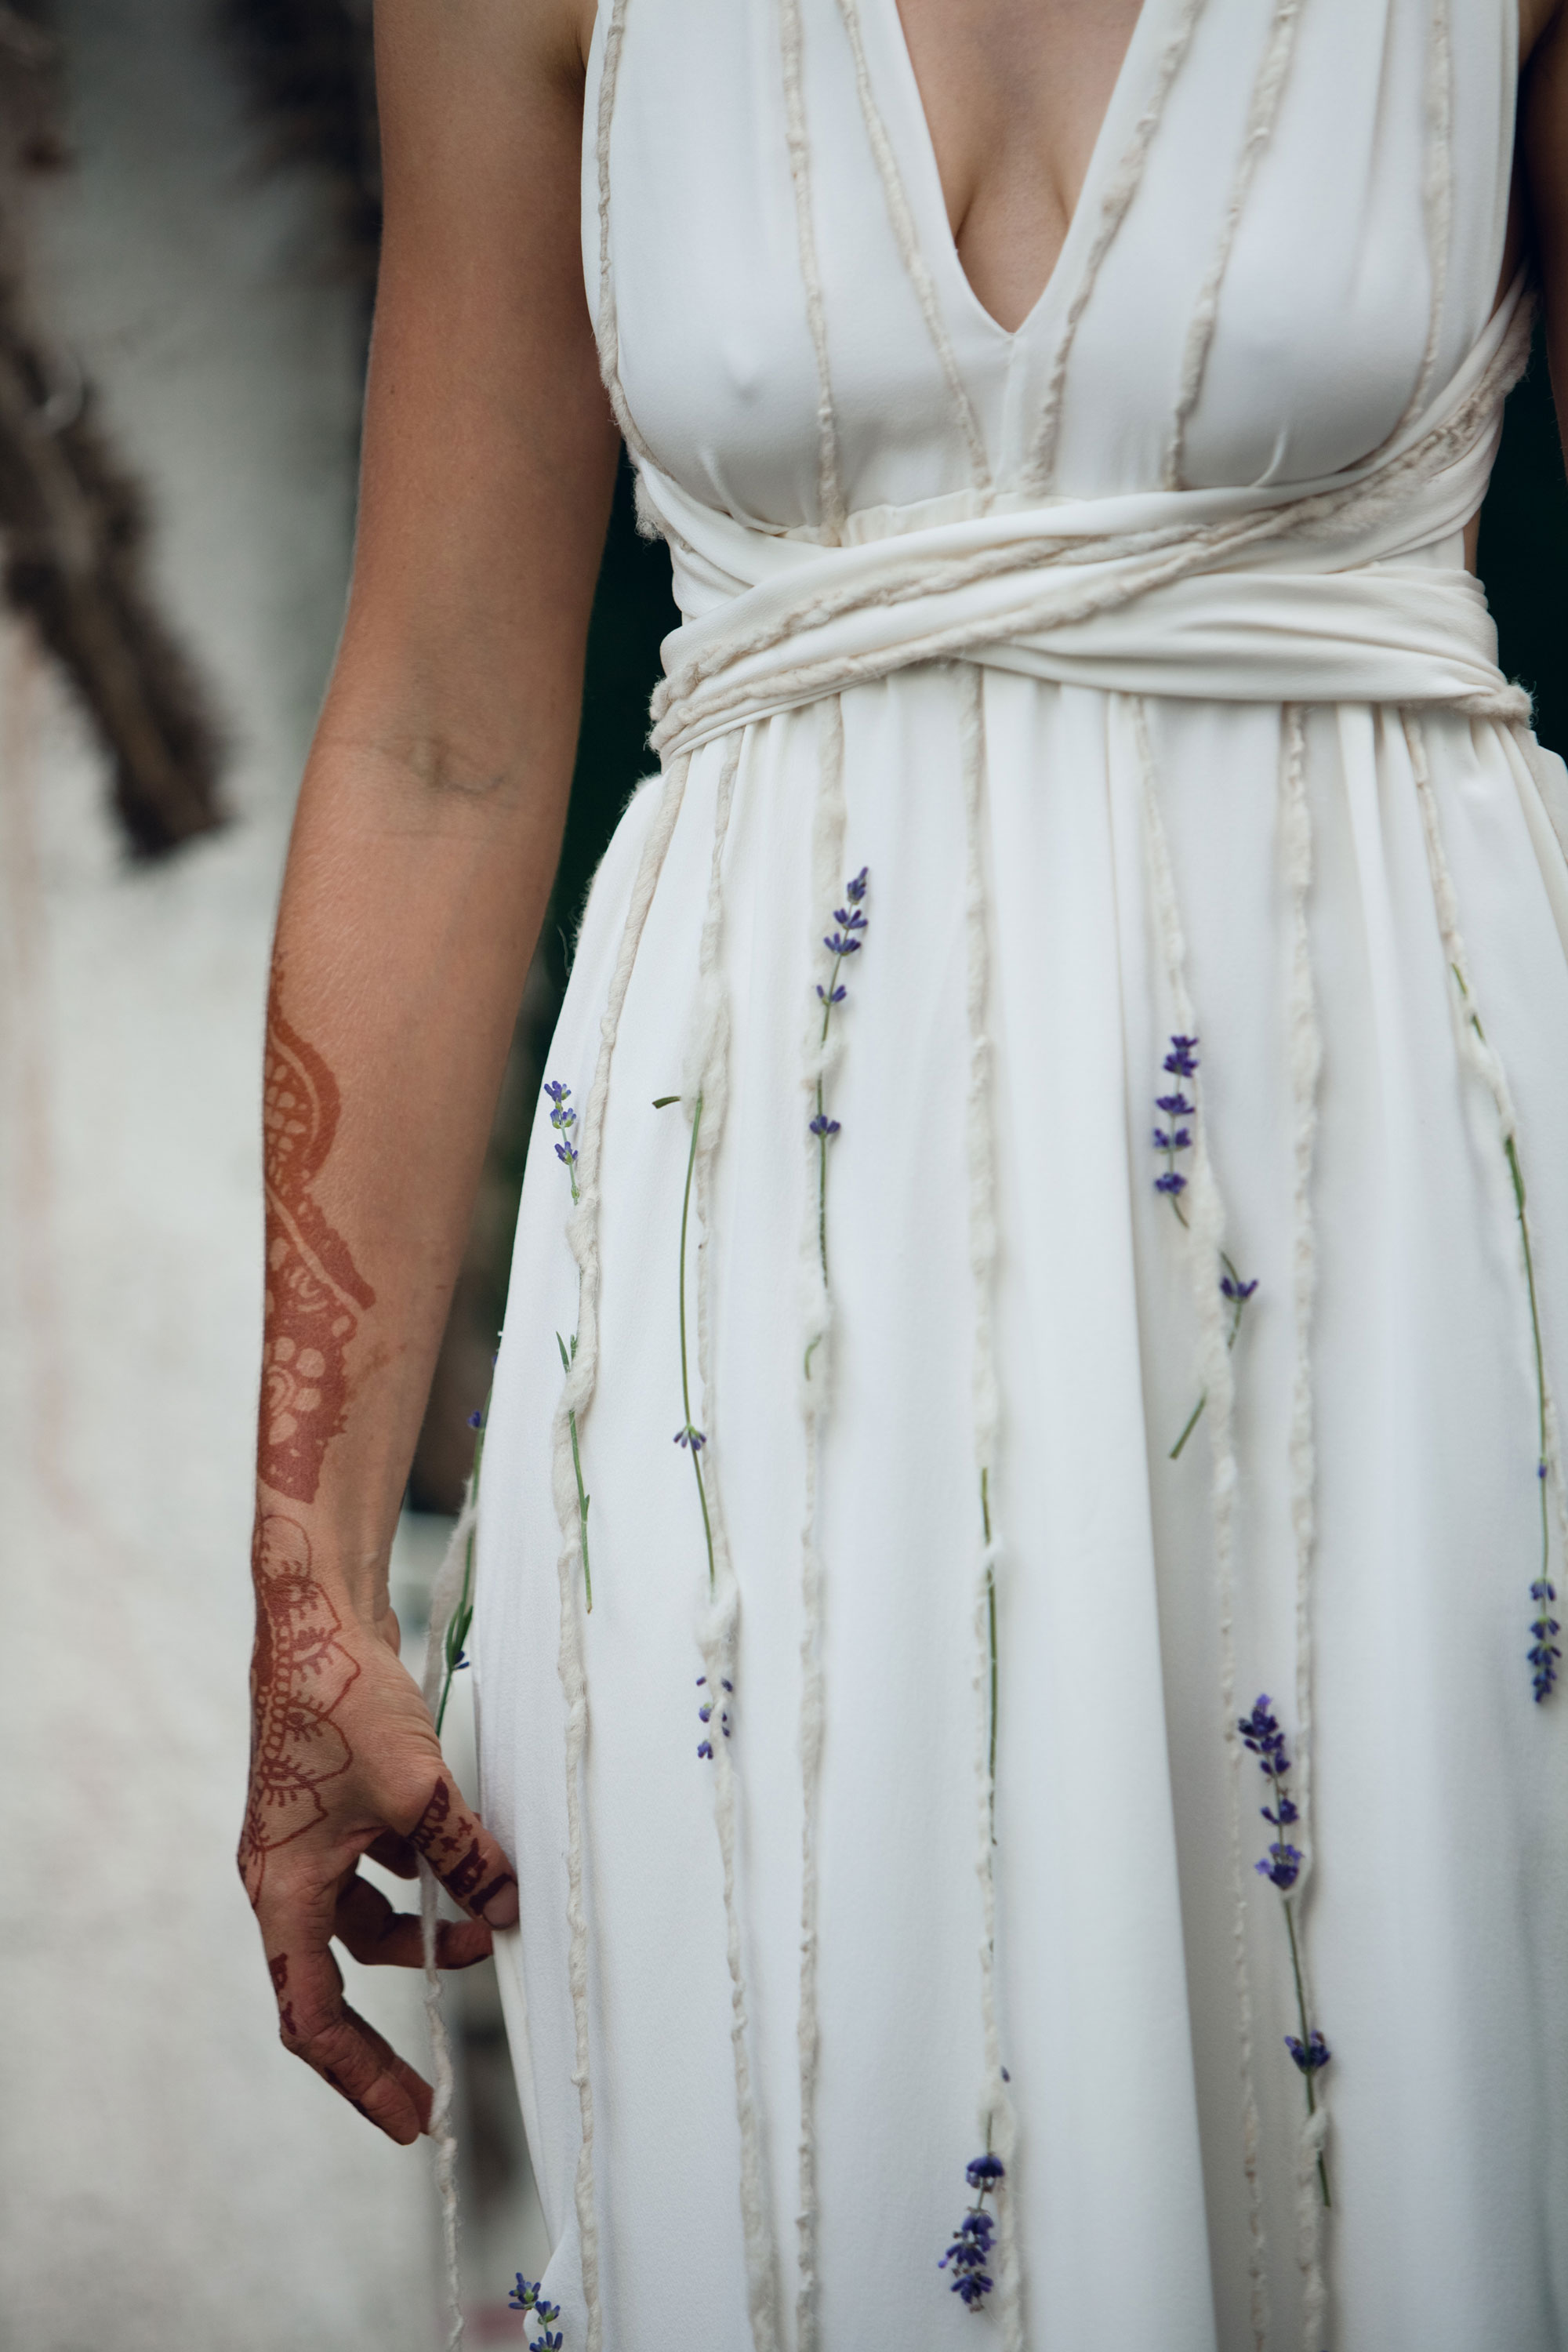 A detail of a brides dress